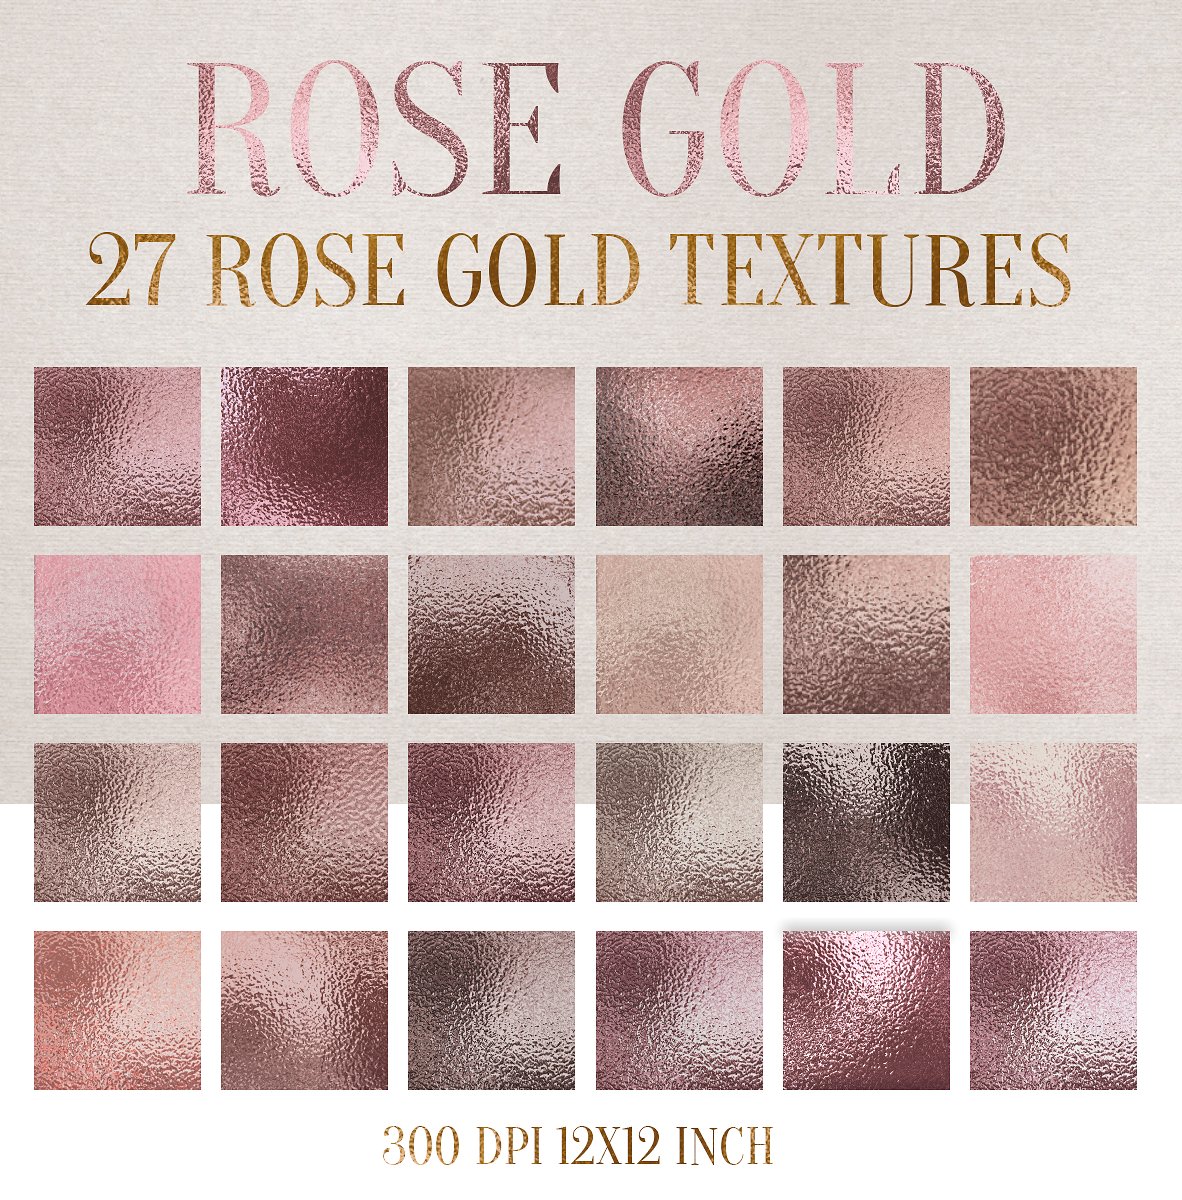 玛瑙石&玫瑰金纹理 Agate Stone & Rose Gold Textures [2G]插图5